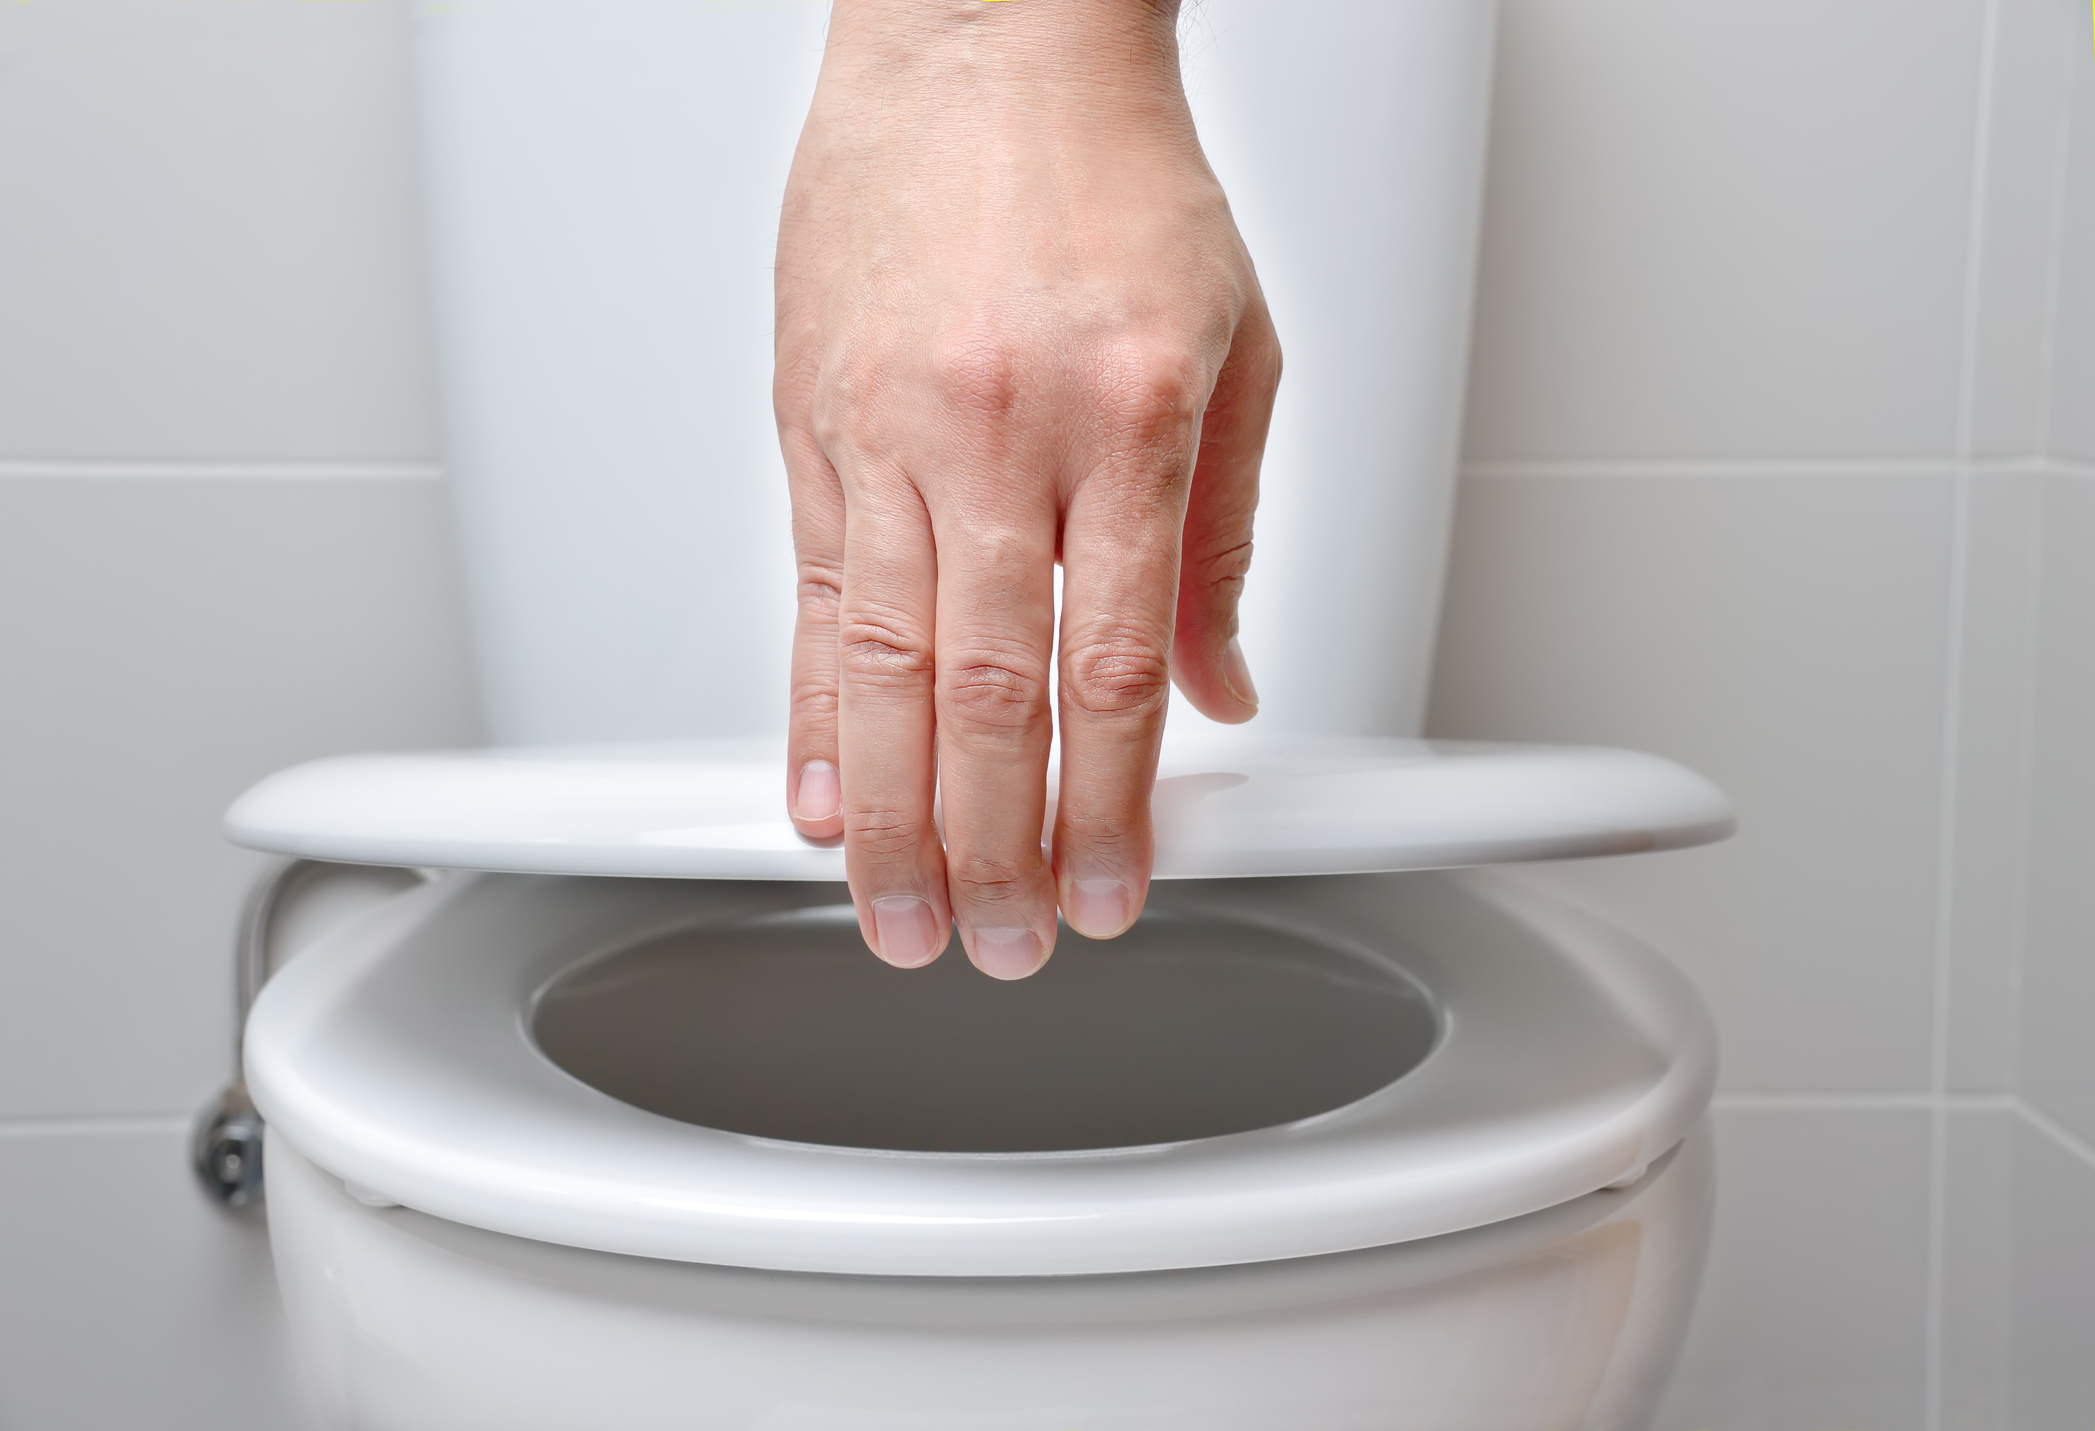 A hand closing a toilet lid